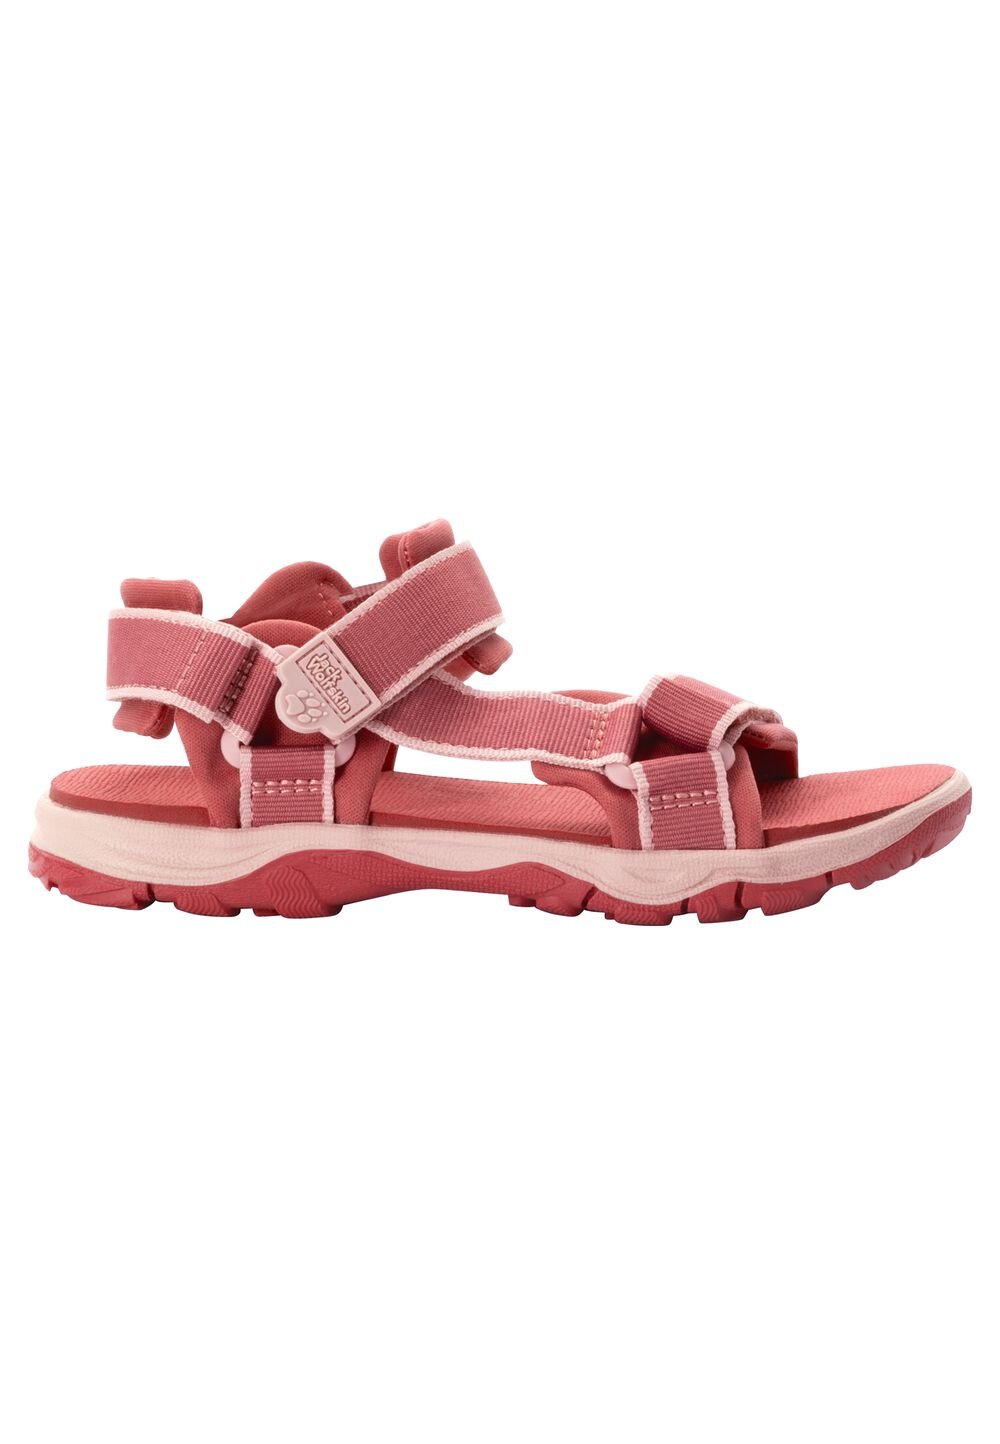 Jack Wolfskin Seven Seas 3 Kids Kinderen sandalen 33 soft pink soft pink